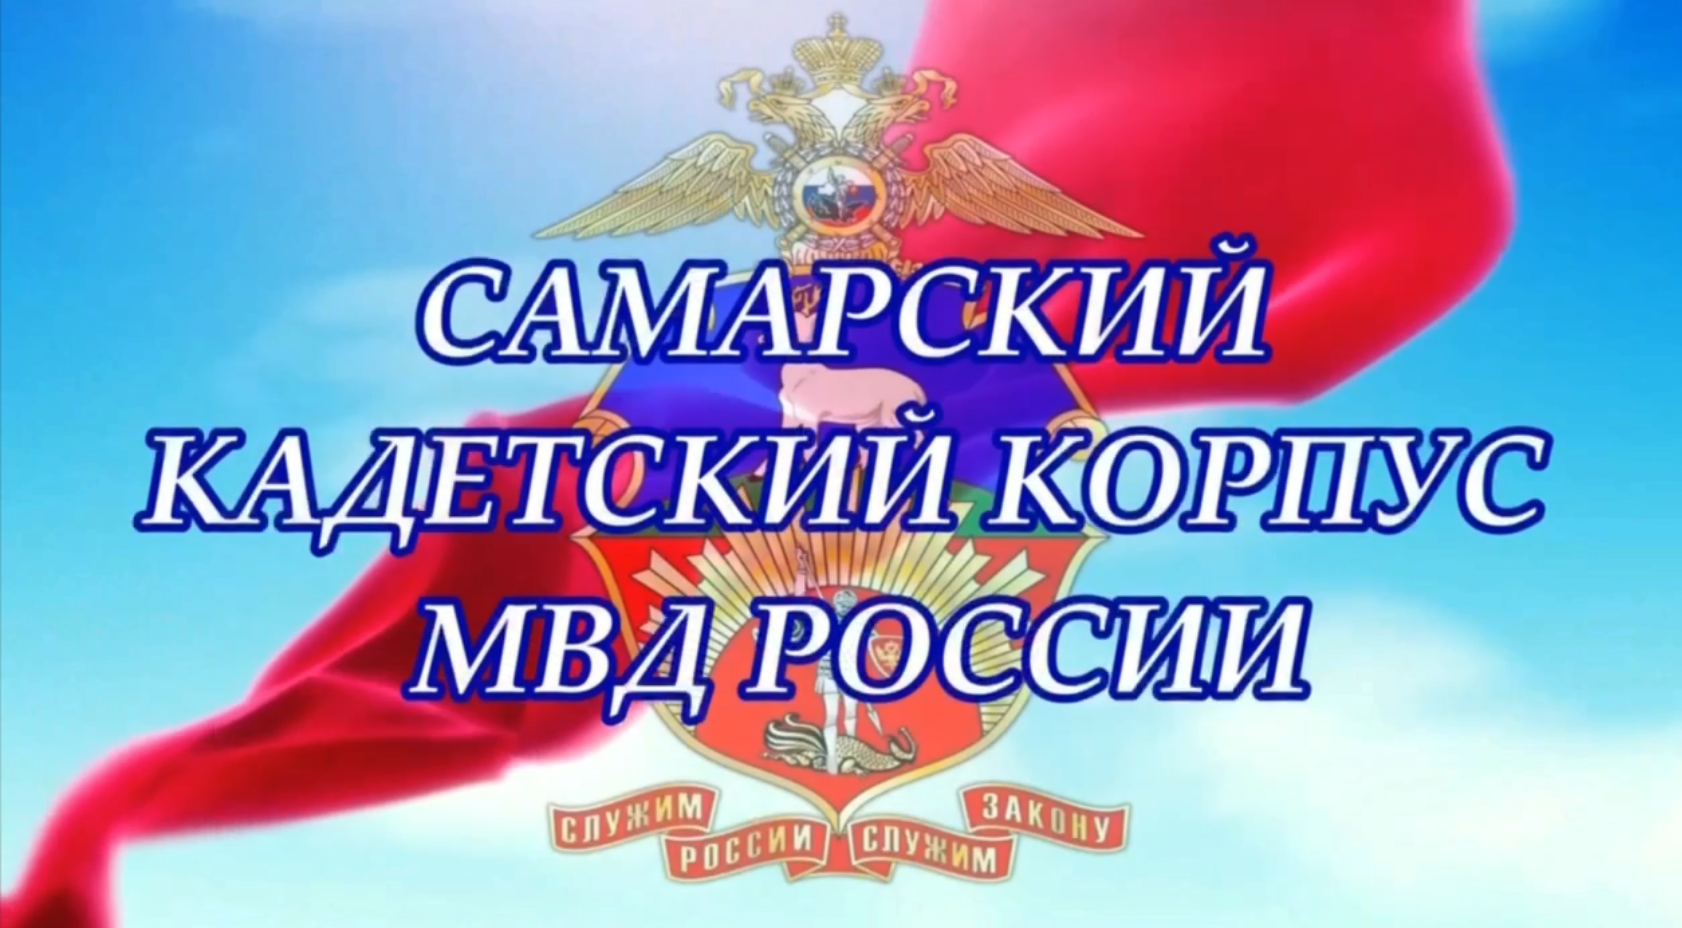 Команда Самарского кадетского корпуса МВД России